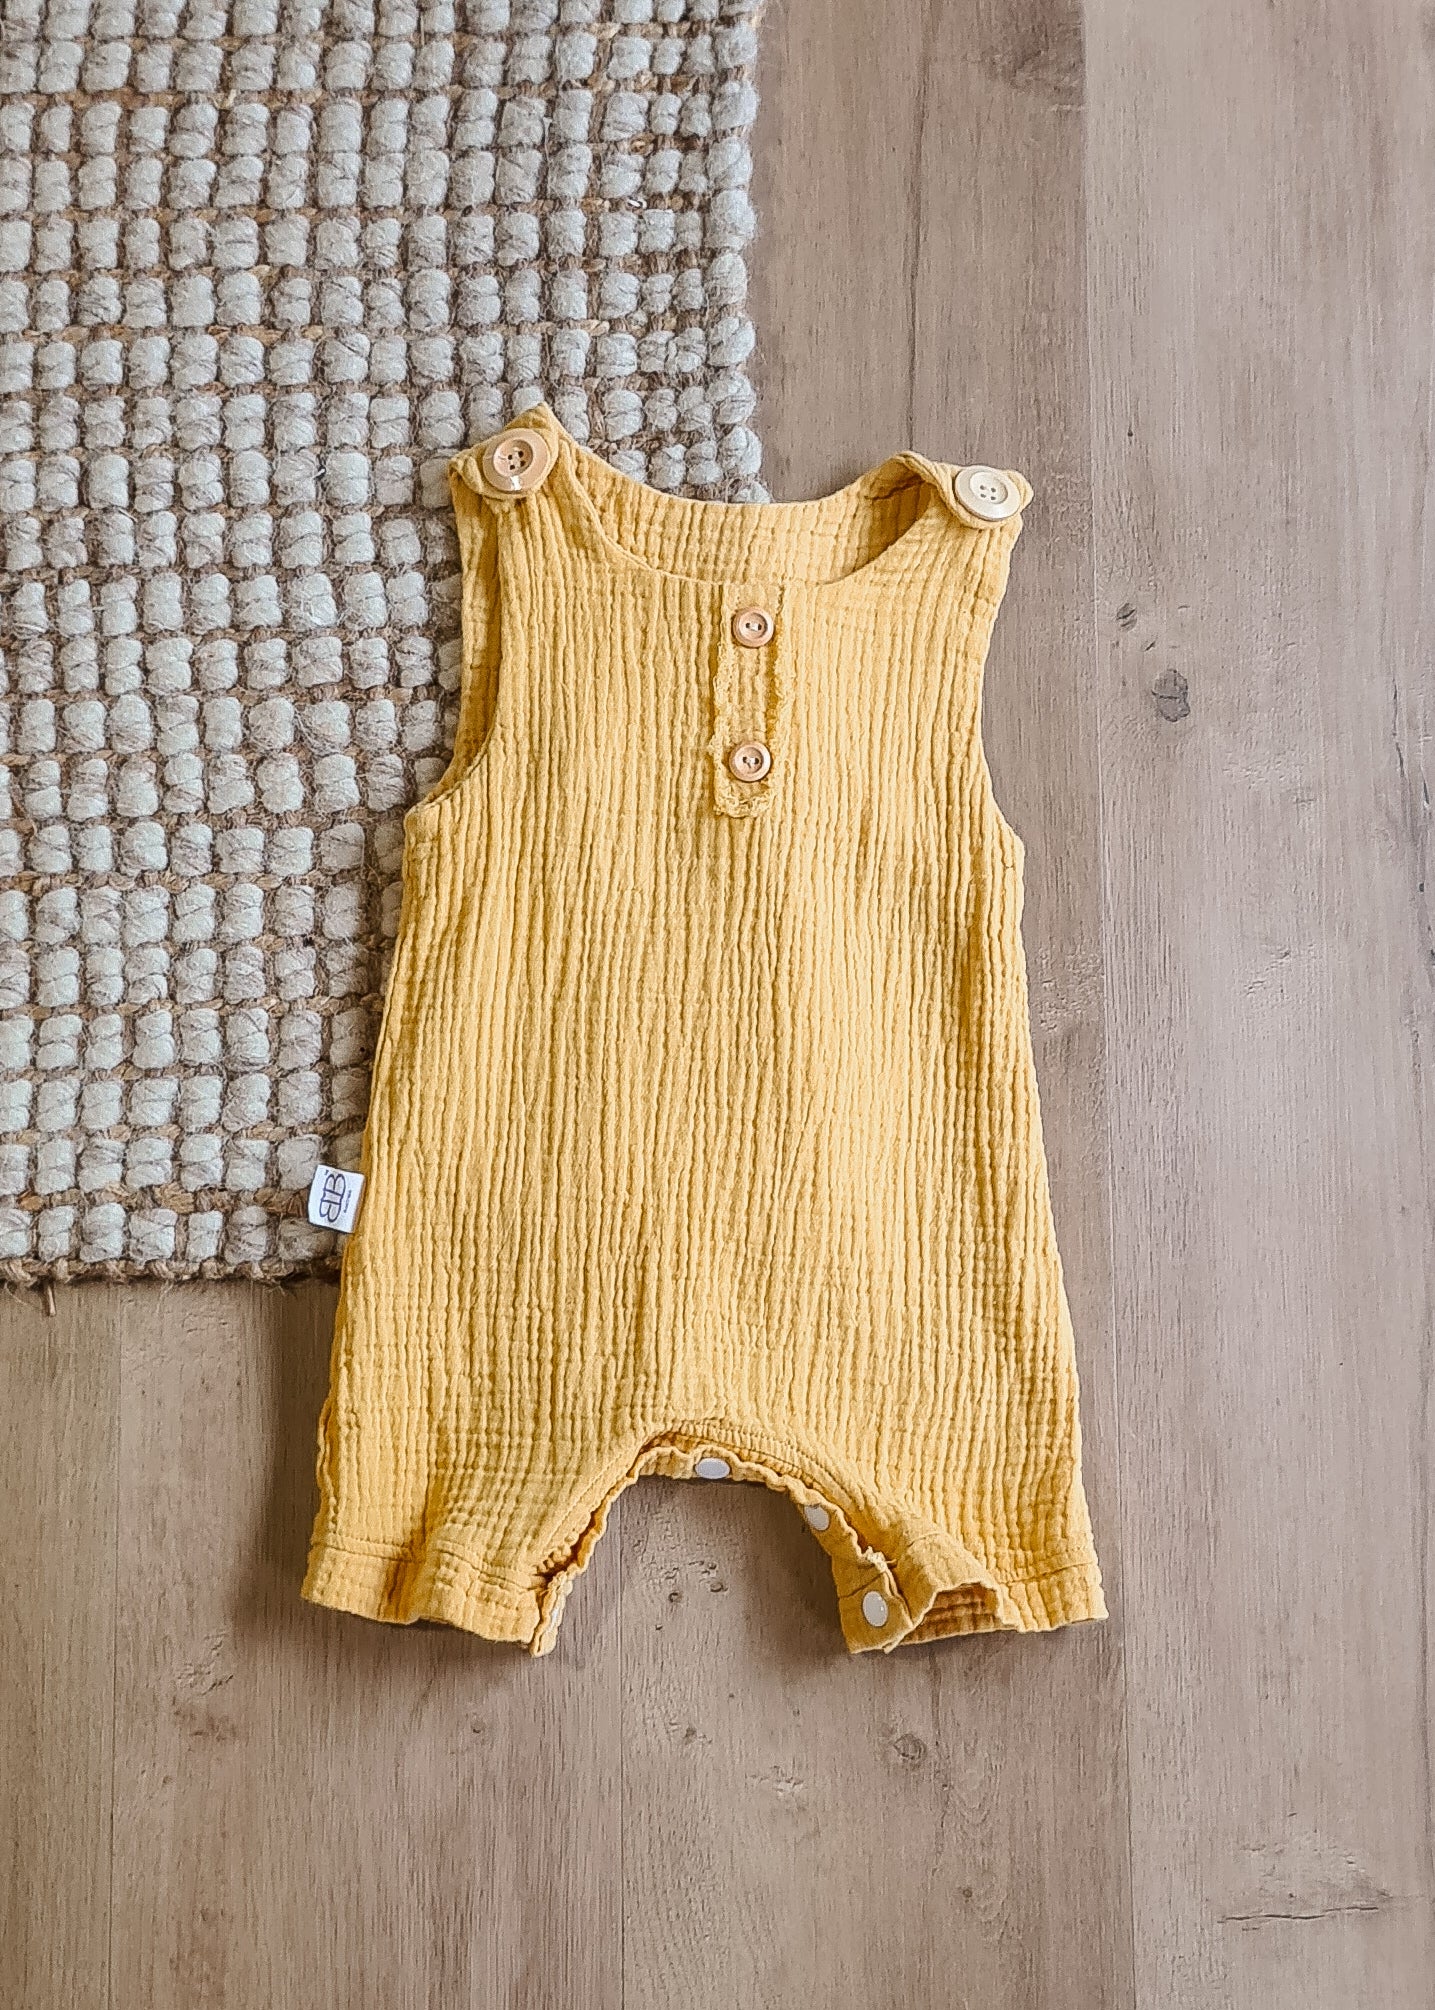 Organic cotton baby romper mustard yellow overalls